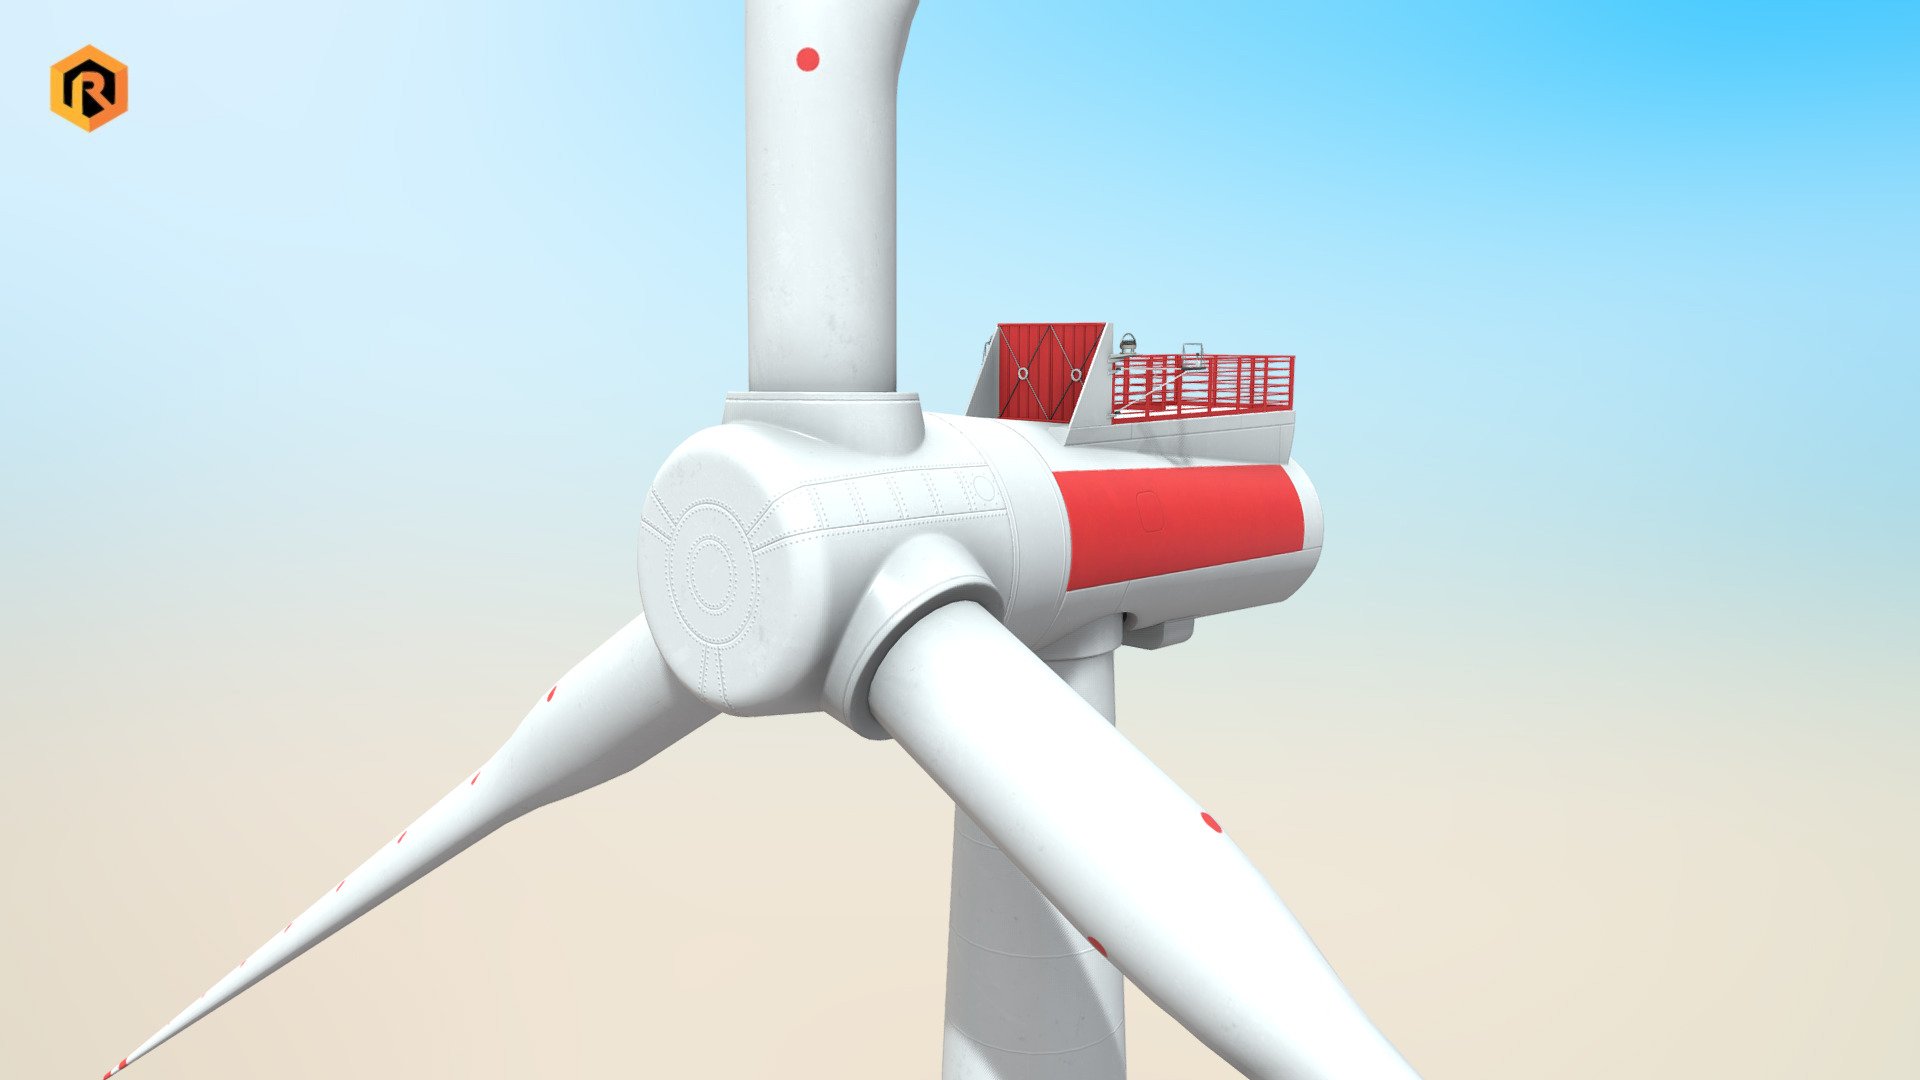 Low-poly PBR 3D model of Wind Turbine.

It is a &ldquo;simple